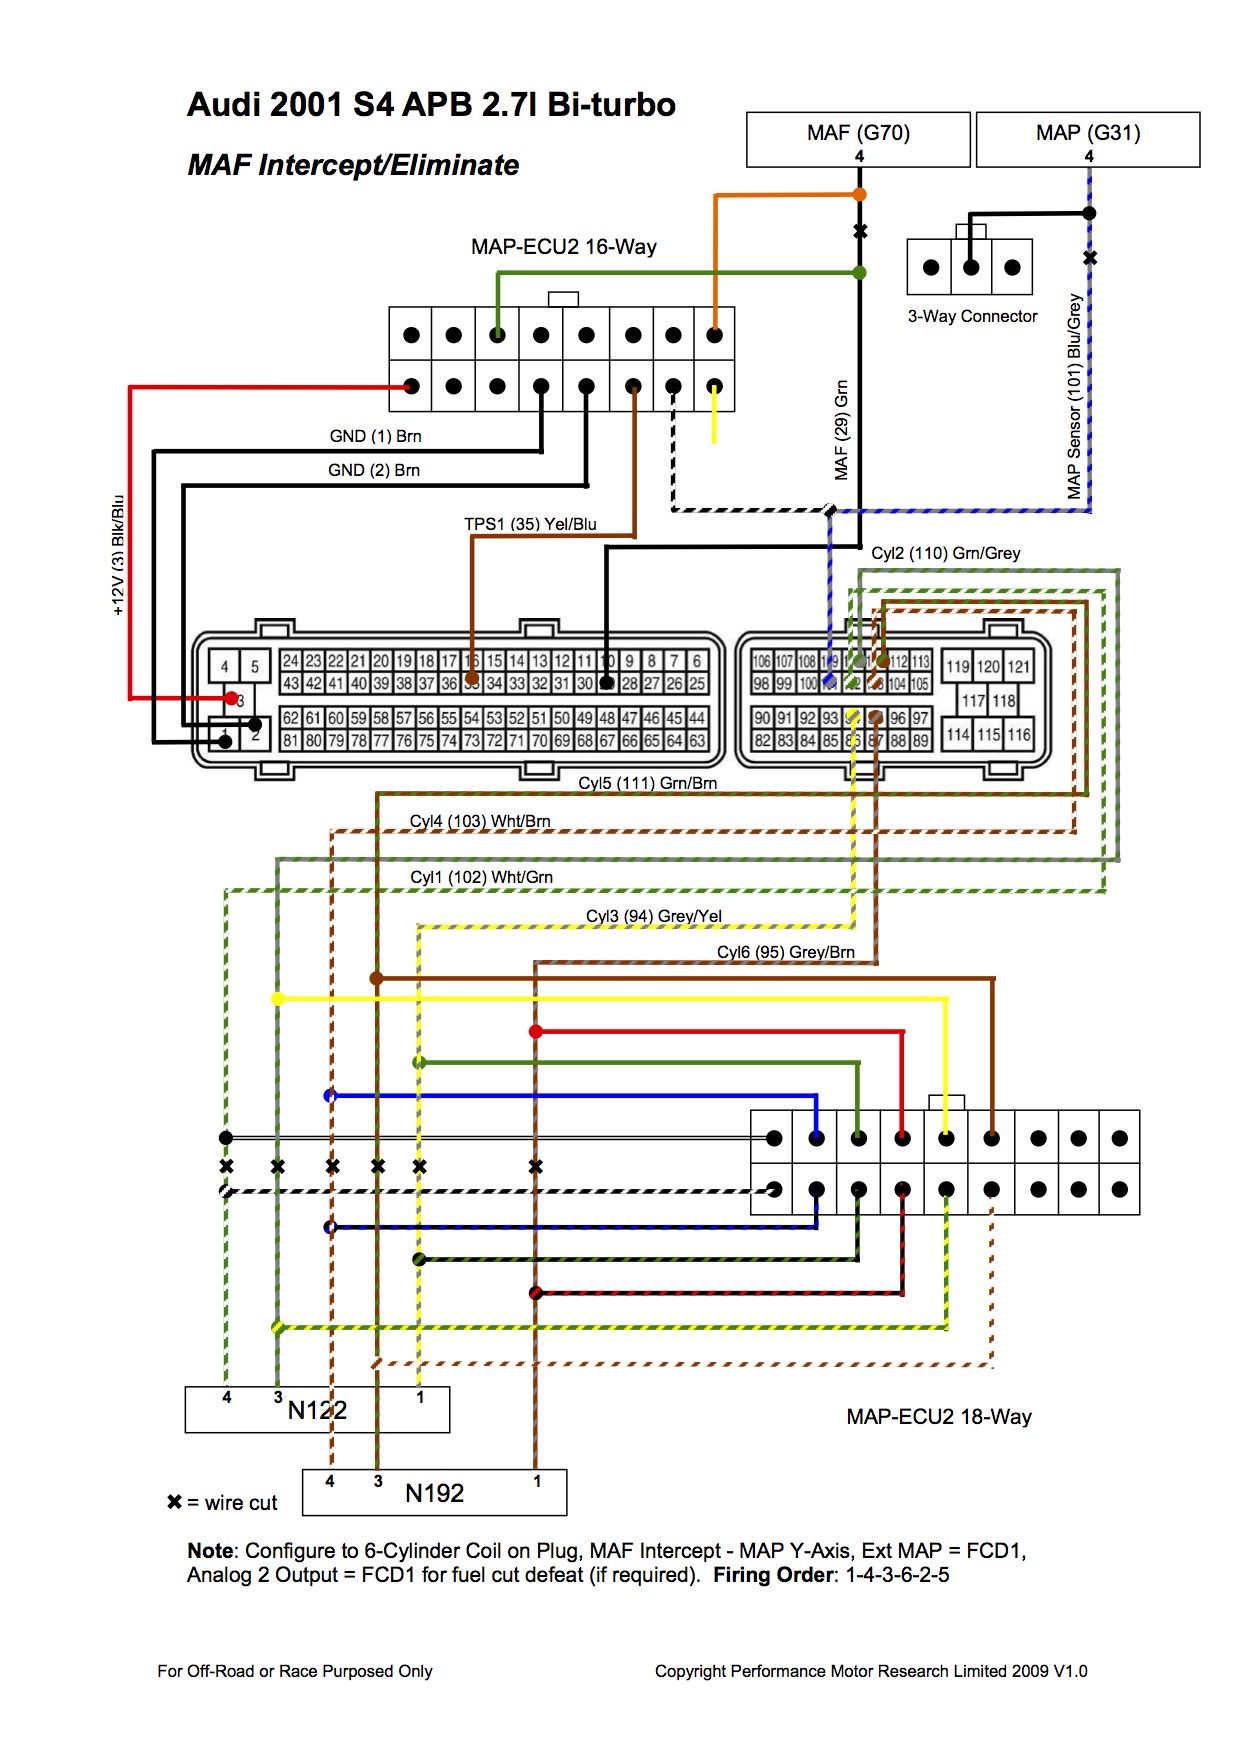 2002 Mitsubishi Eclipse Engine Diagram Vw Golf 2002 Electrical Wiring Diagram Wiring Diagram Of 2002 Mitsubishi Eclipse Engine Diagram